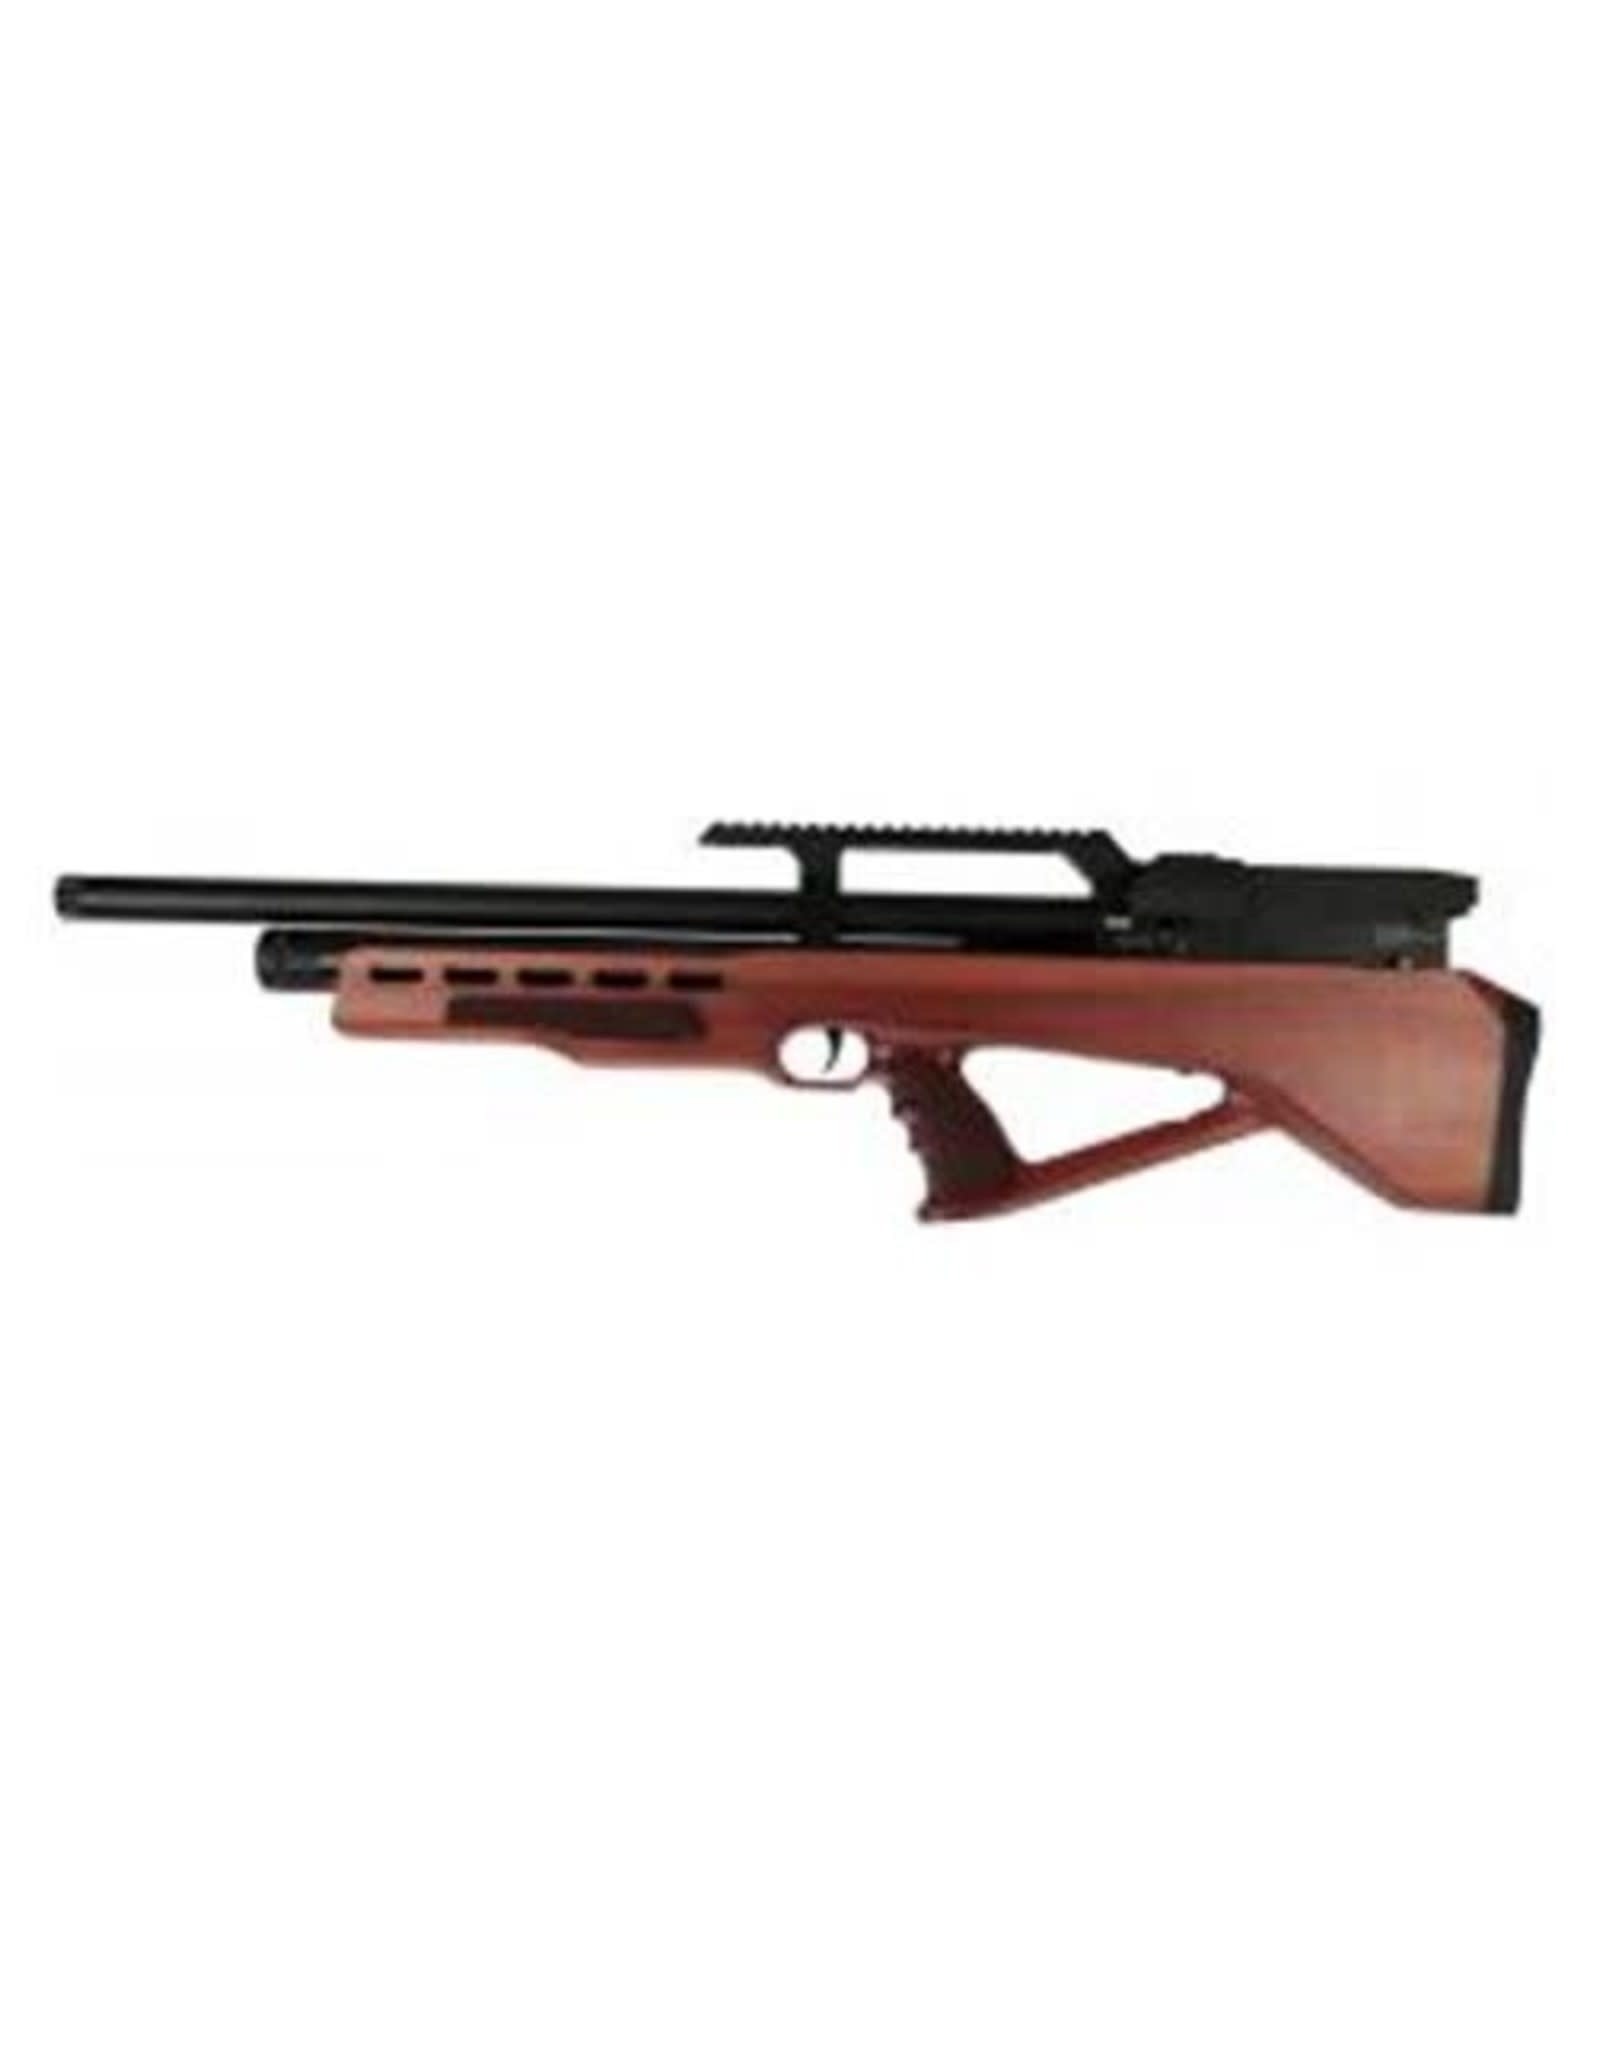 Evanix .22 Cal. | 9 Rd | Raptor Bullpup | PCP Air Rifle with Wood Stock & Regulator by Evanix